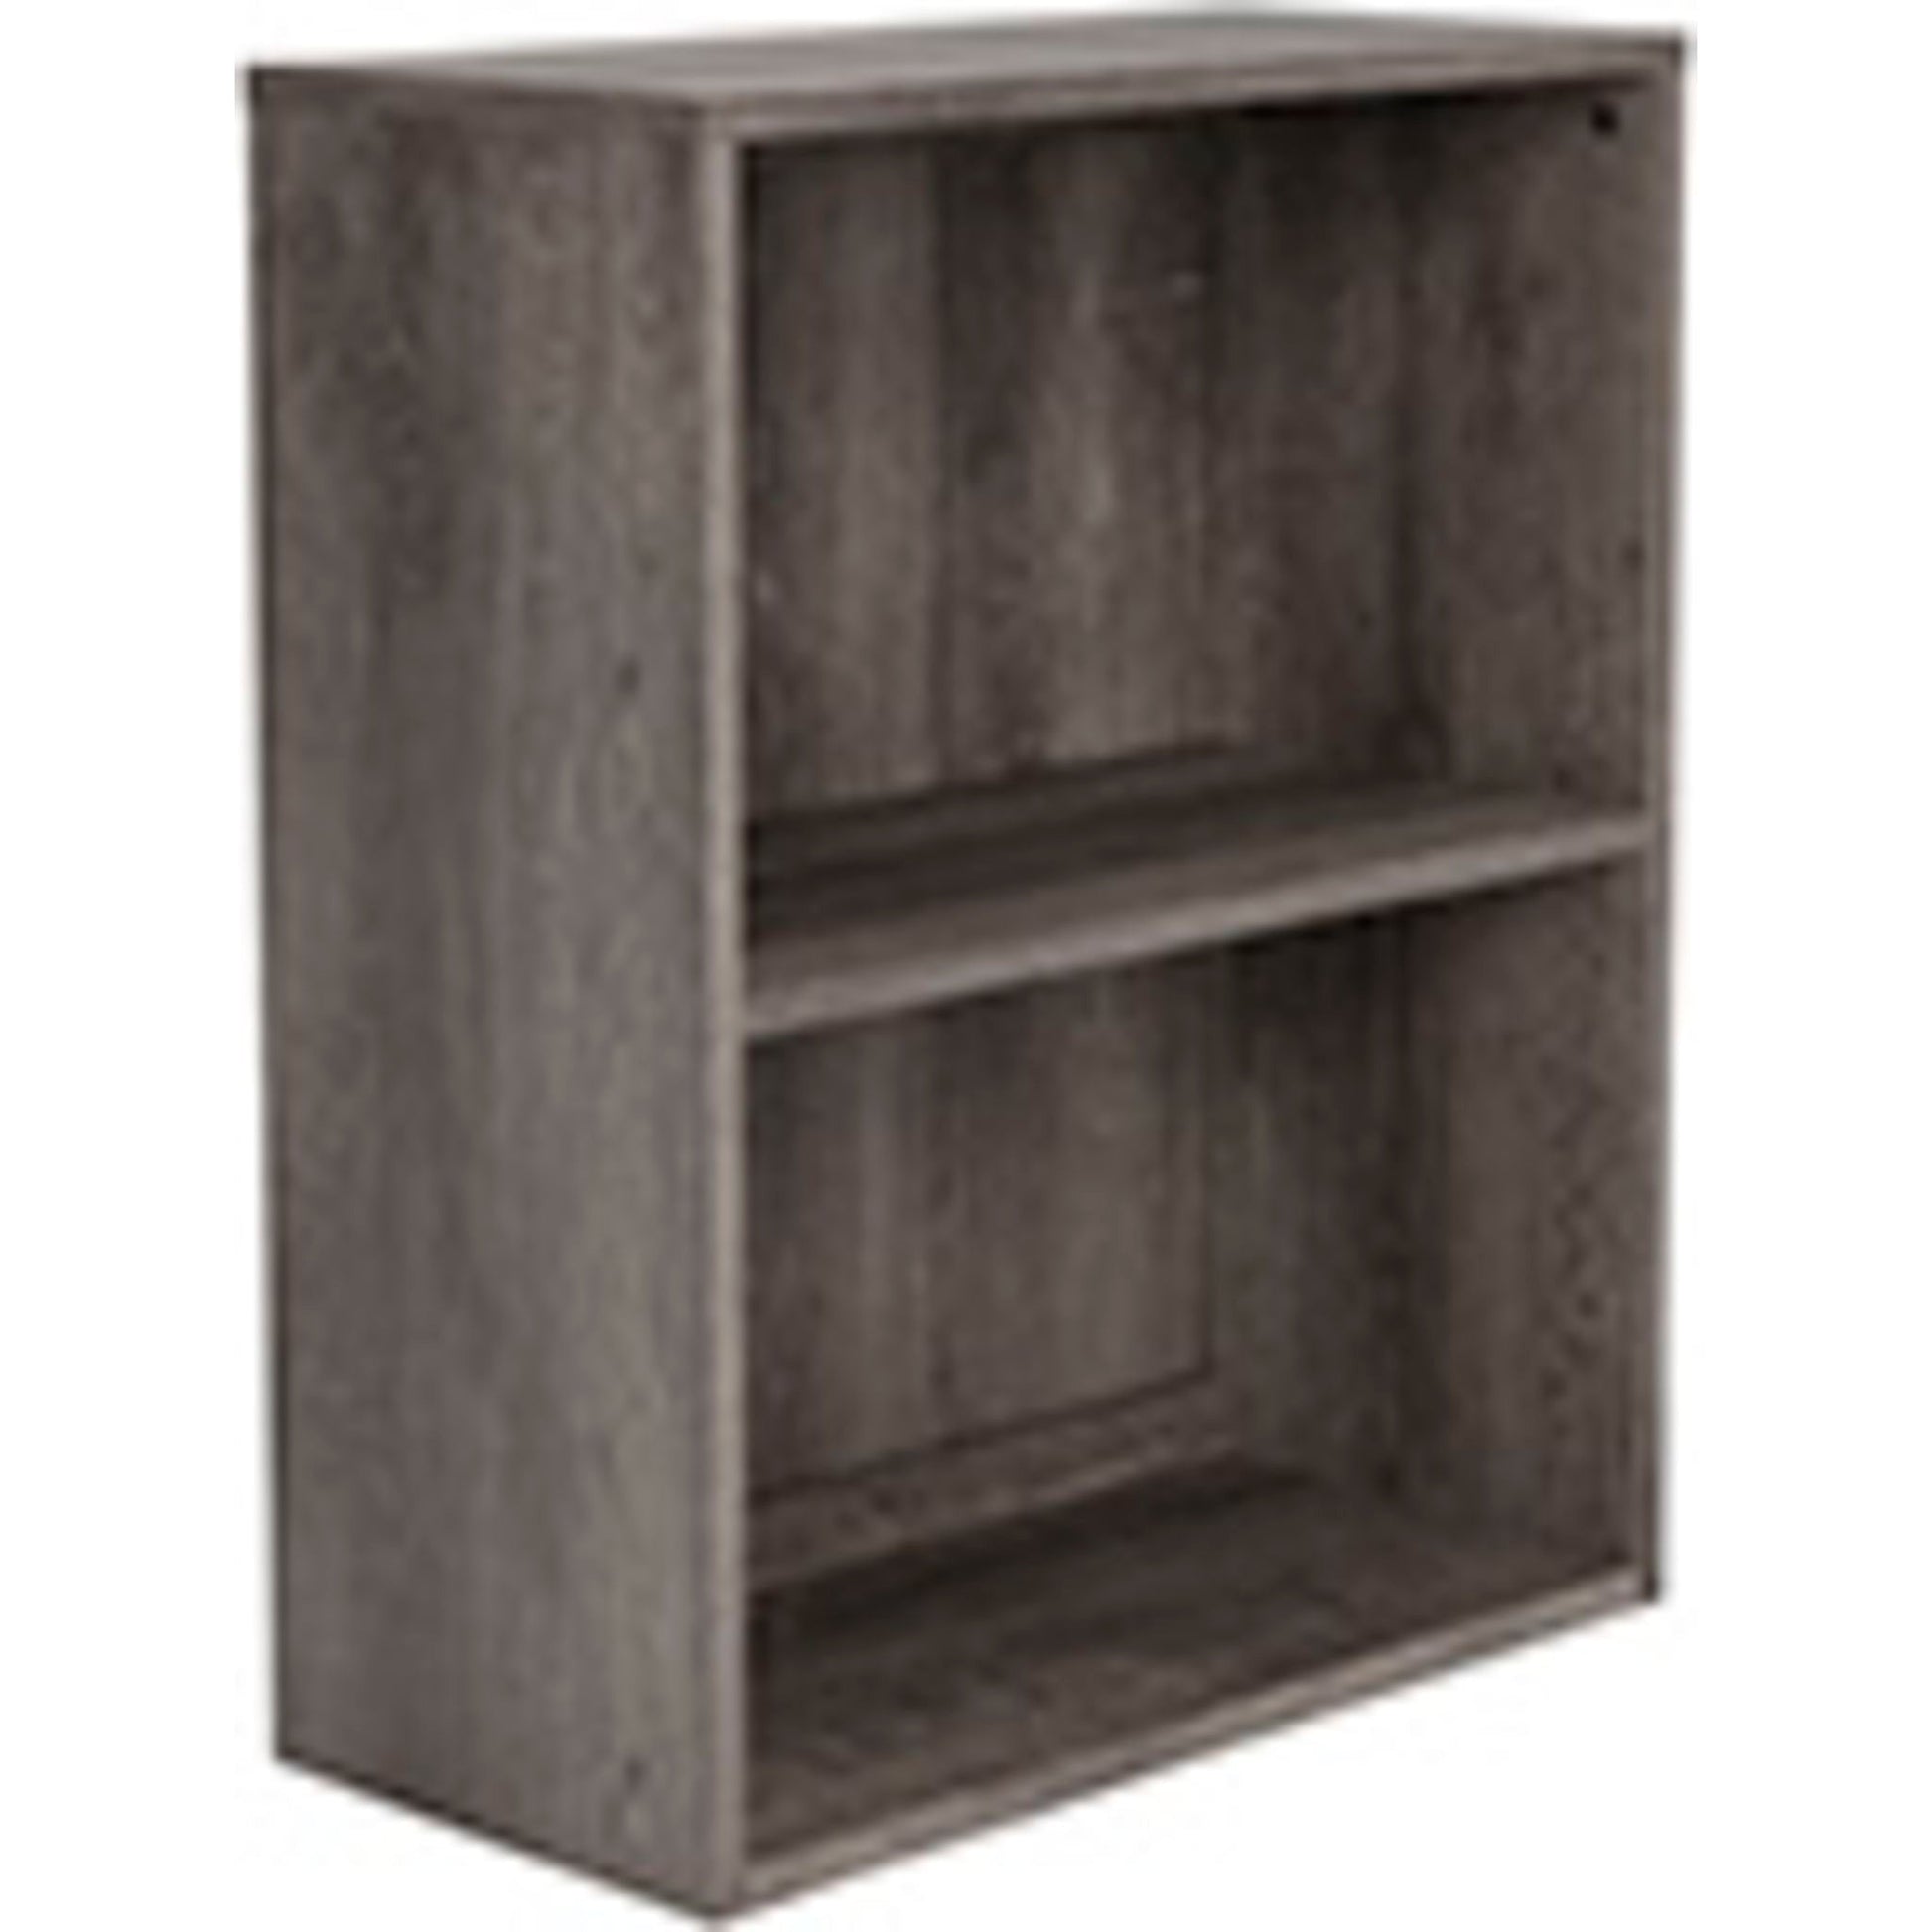 Arlenbry Small Bookcase - Gray